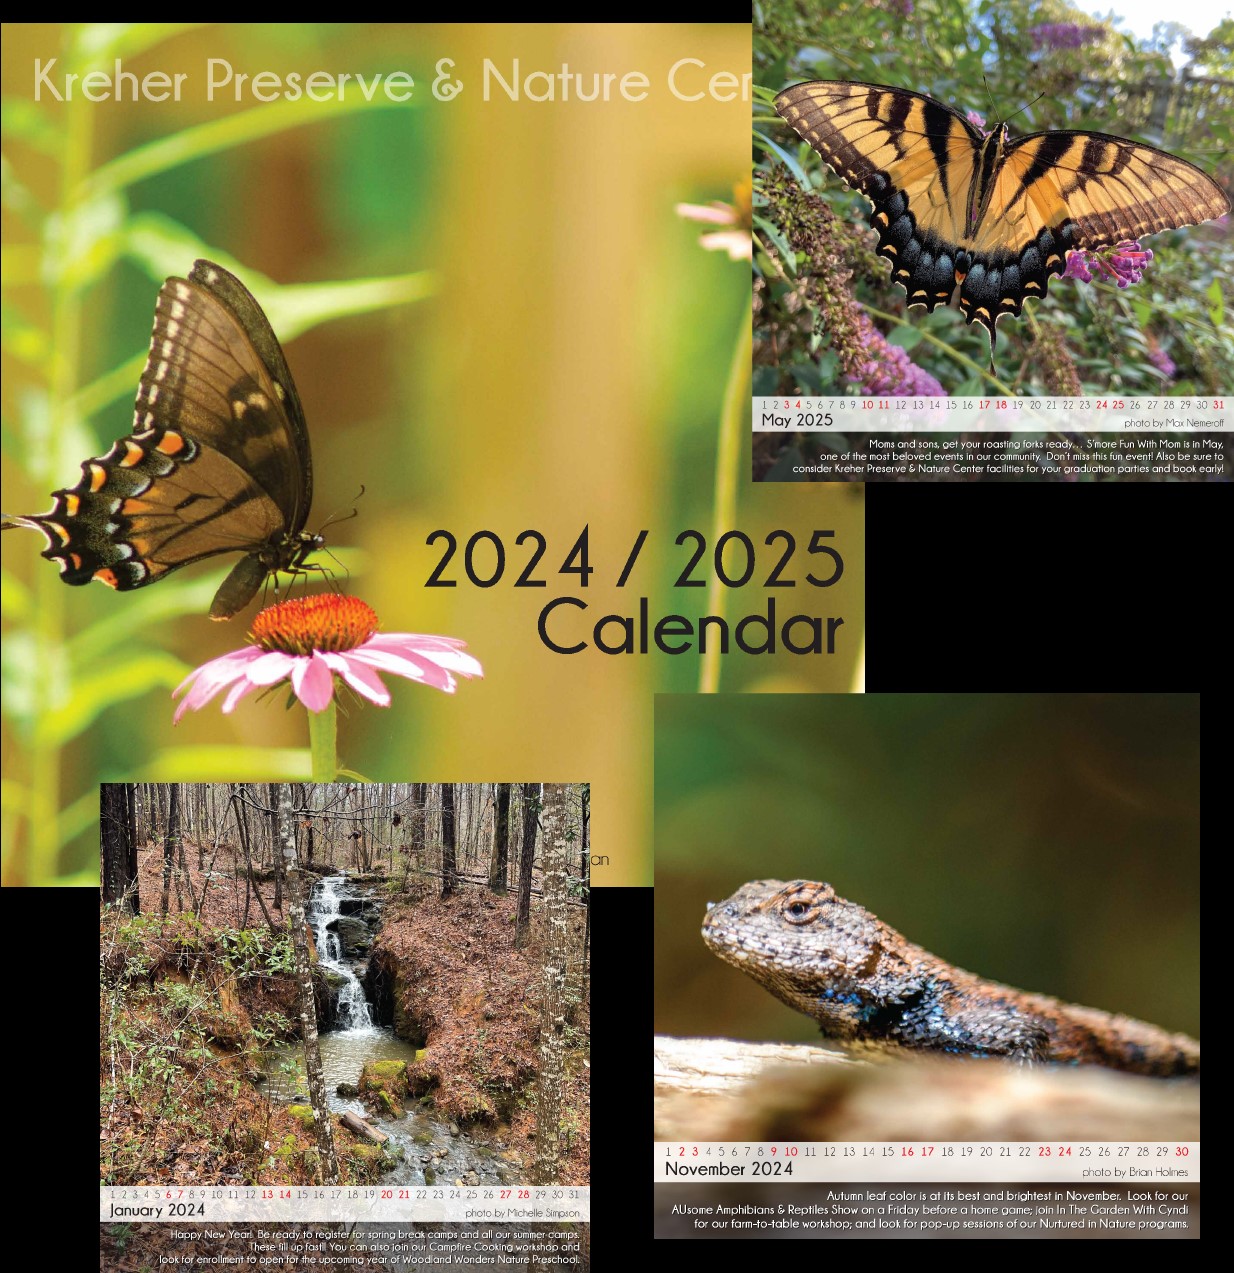 KPNC 30th Anniversary Photo Contest Calendar